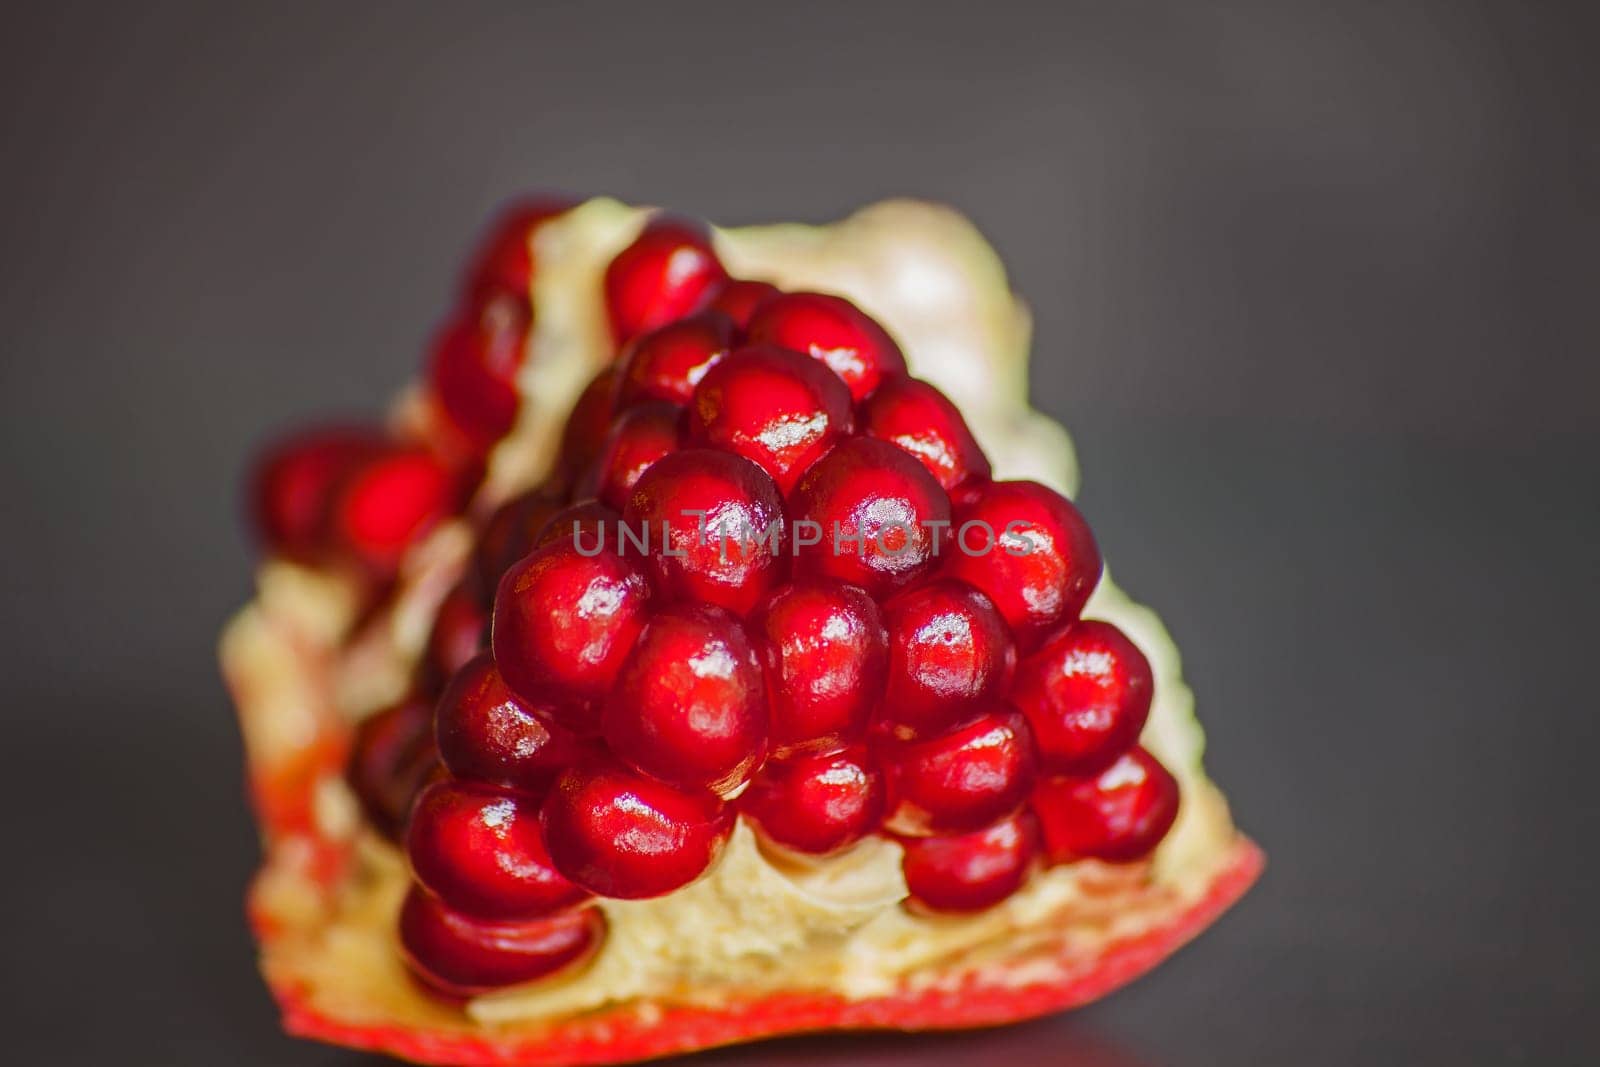 Ripe Pomegranate seeds 10595 by kobus_peche